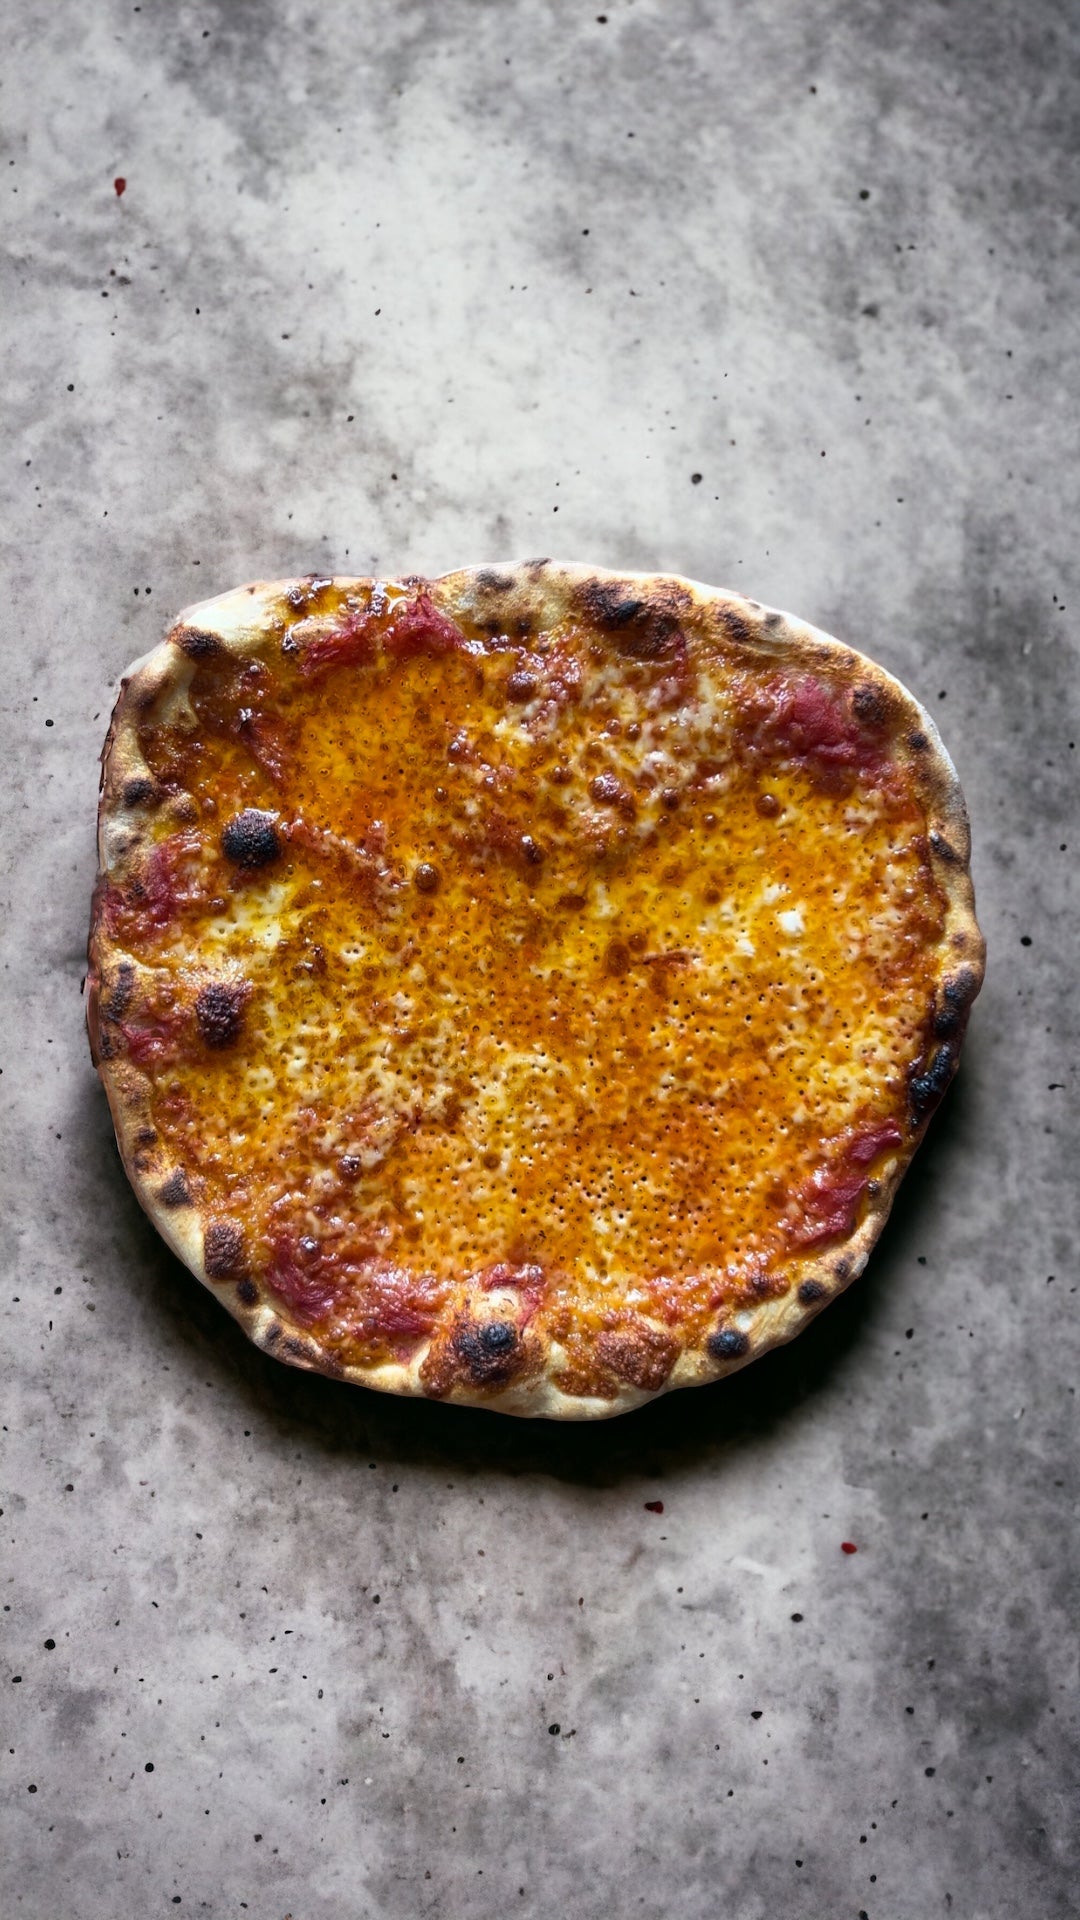 Crispy Thin Crust Supreme Pizza » the practical kitchen